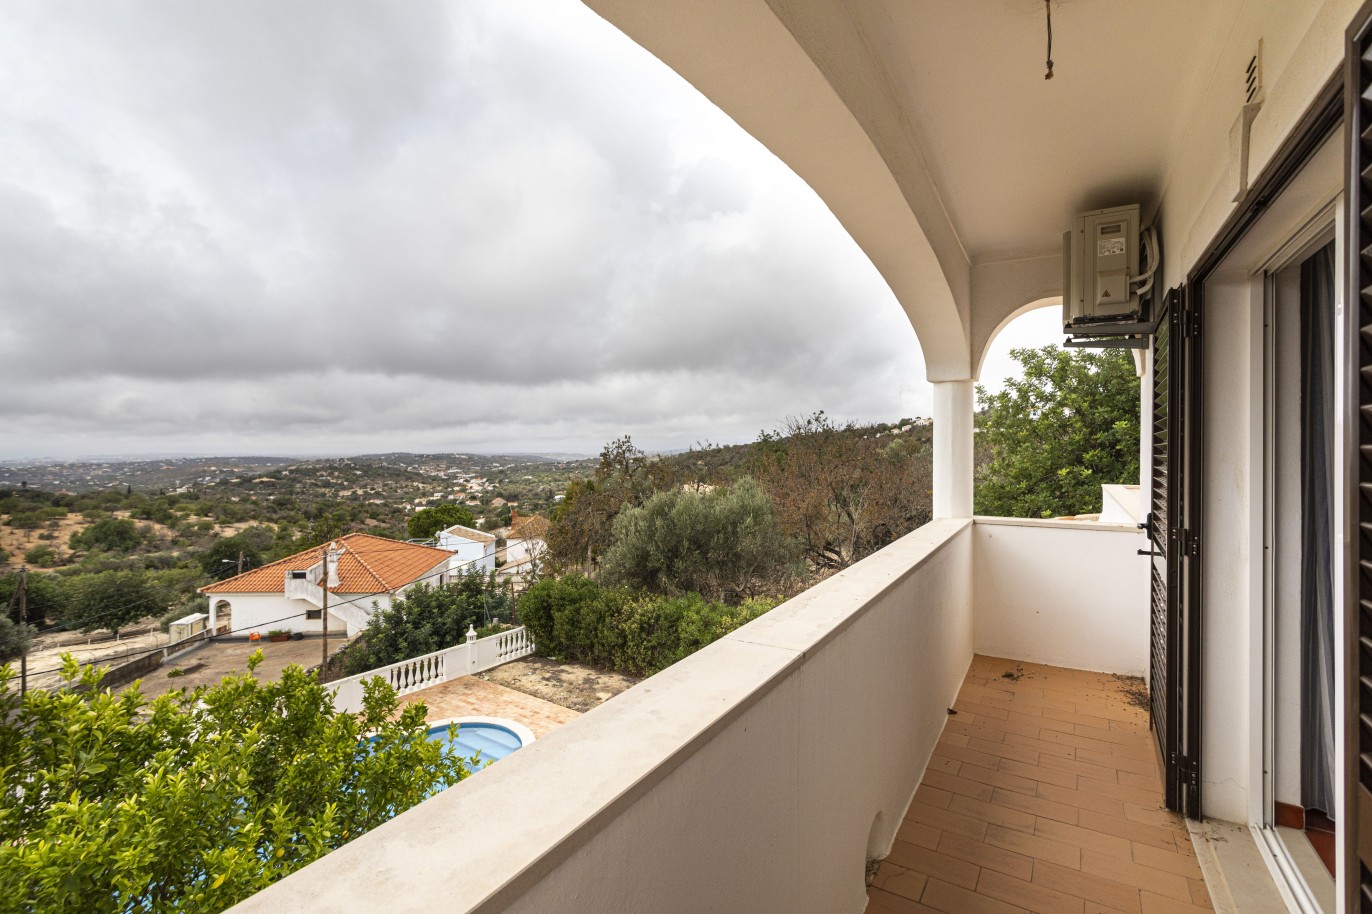 4-Bedroom Villa with swimming pool, for sale in Boliqueime, Loulé, Algarve_242620